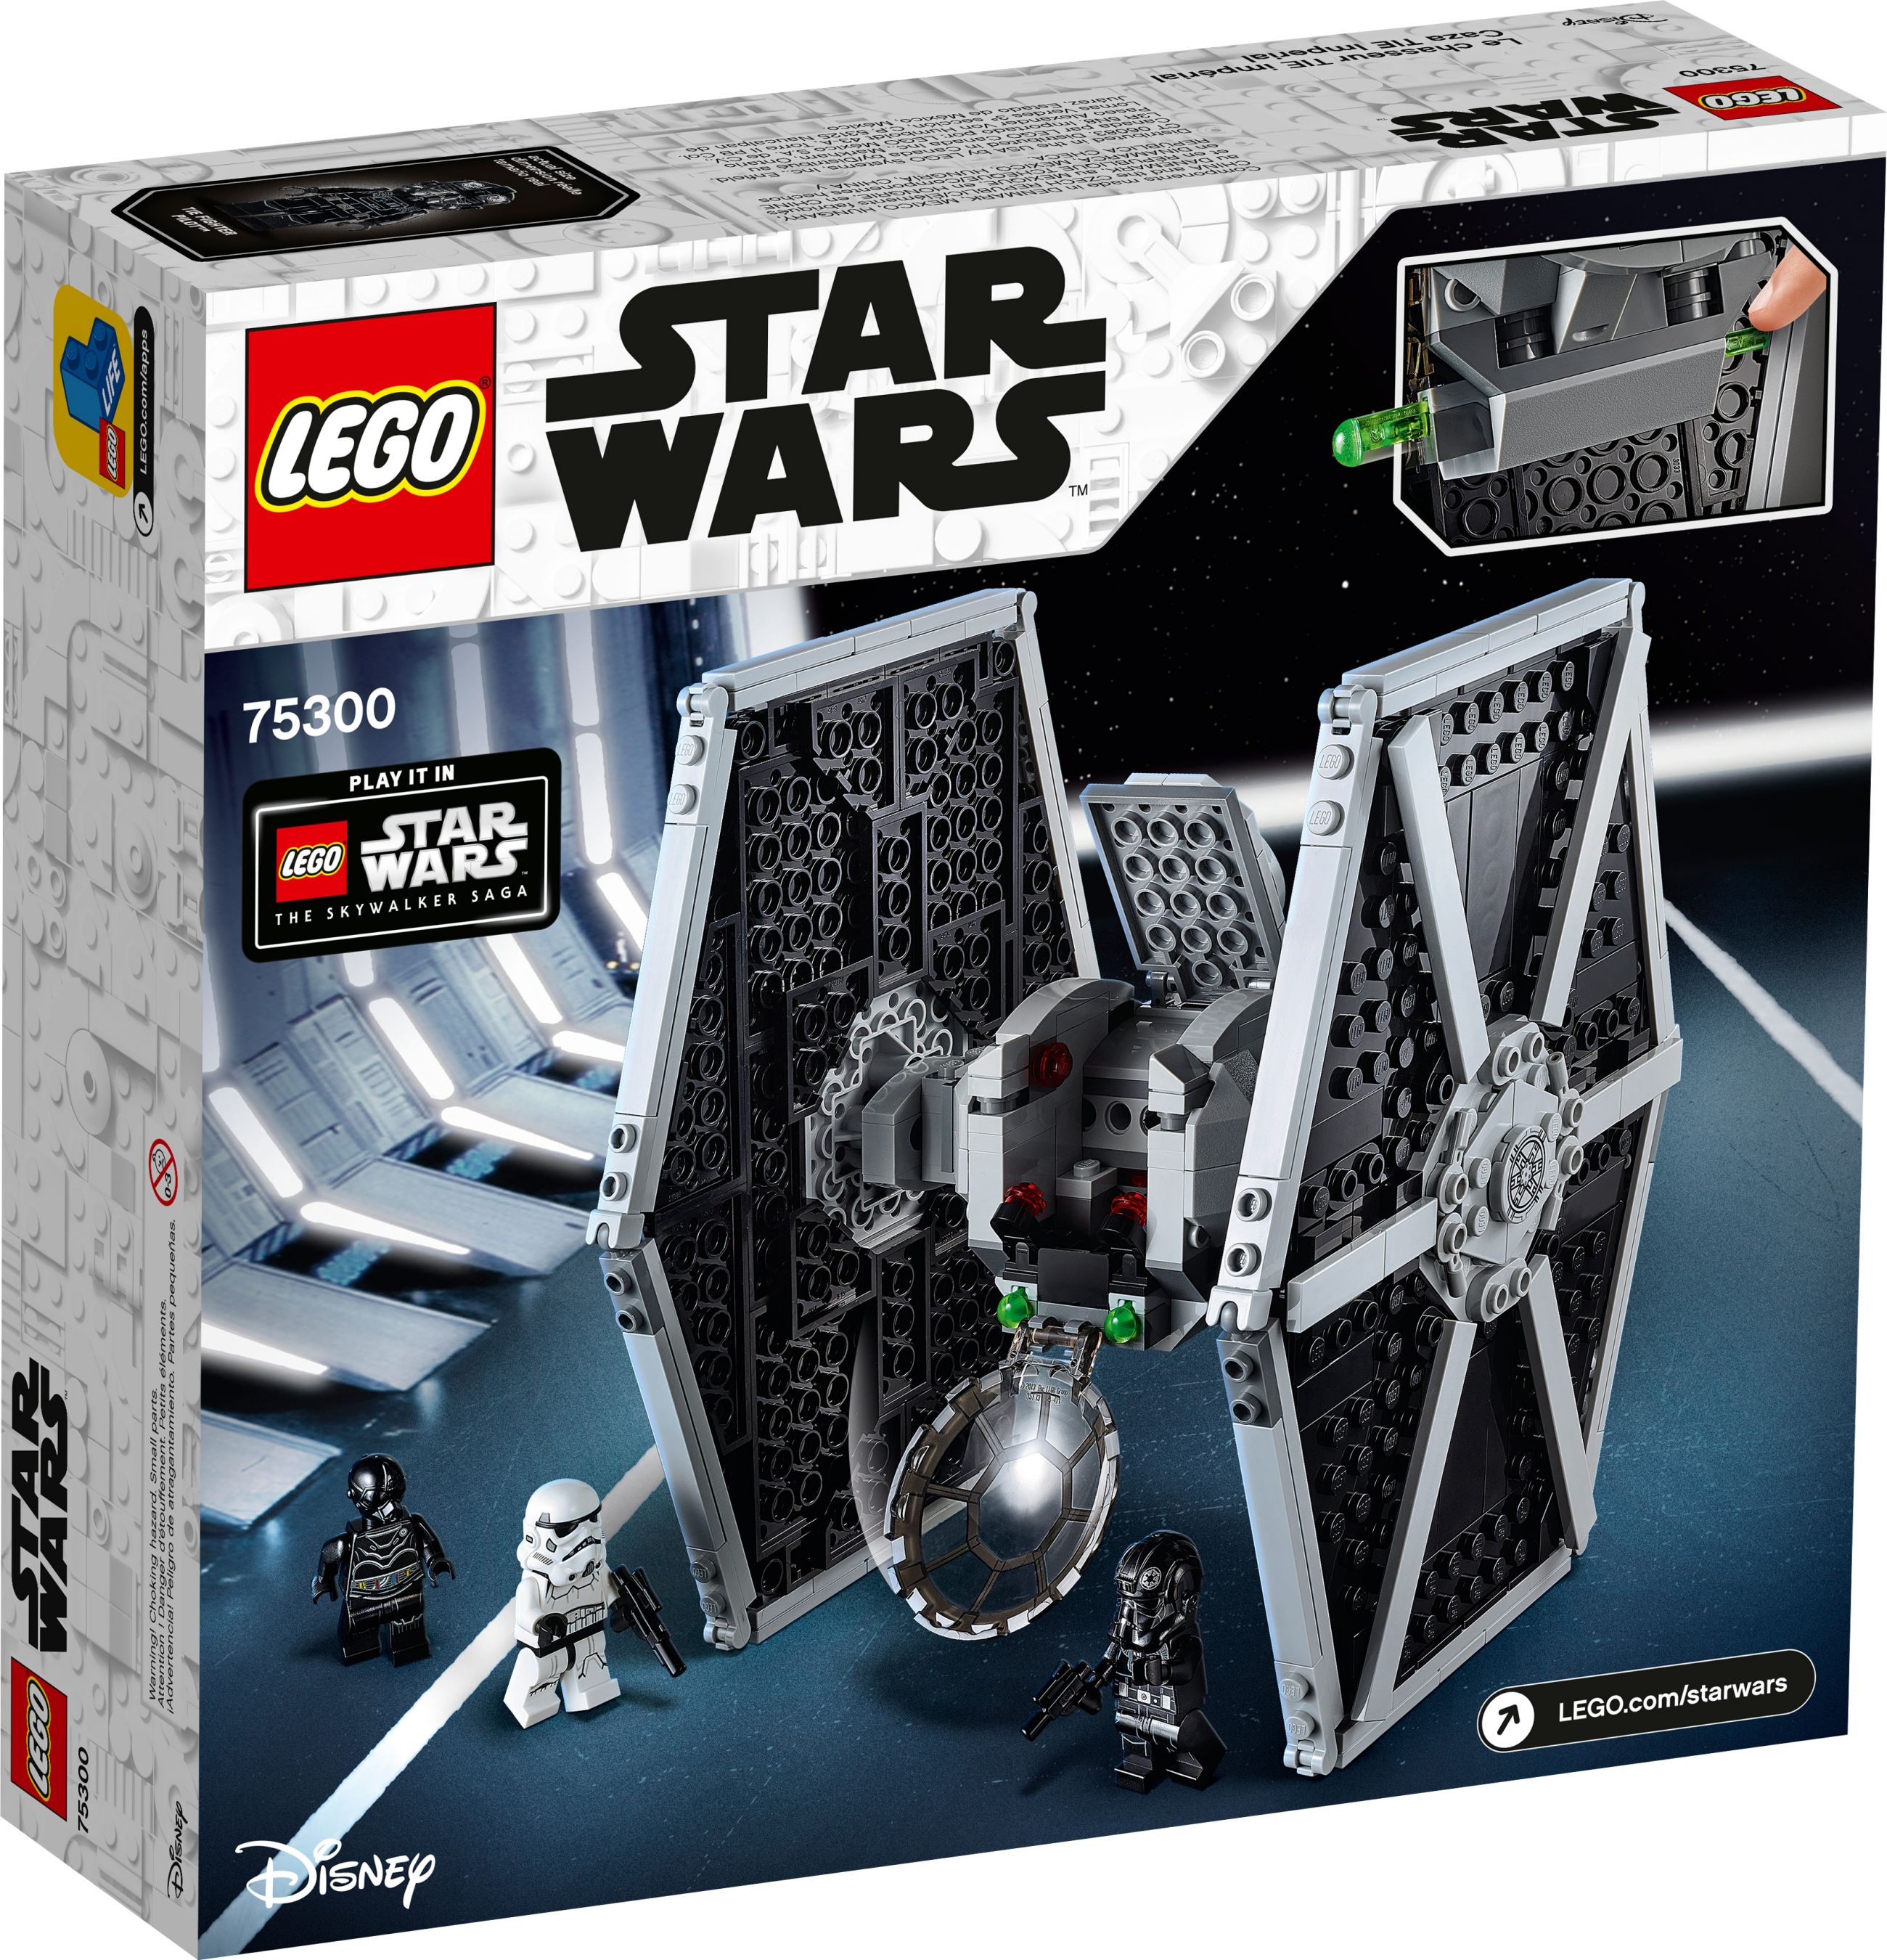 LEGO Star Wars 75300 Imperial TIE Fighter™ LEGO_75300_alt2.jpg